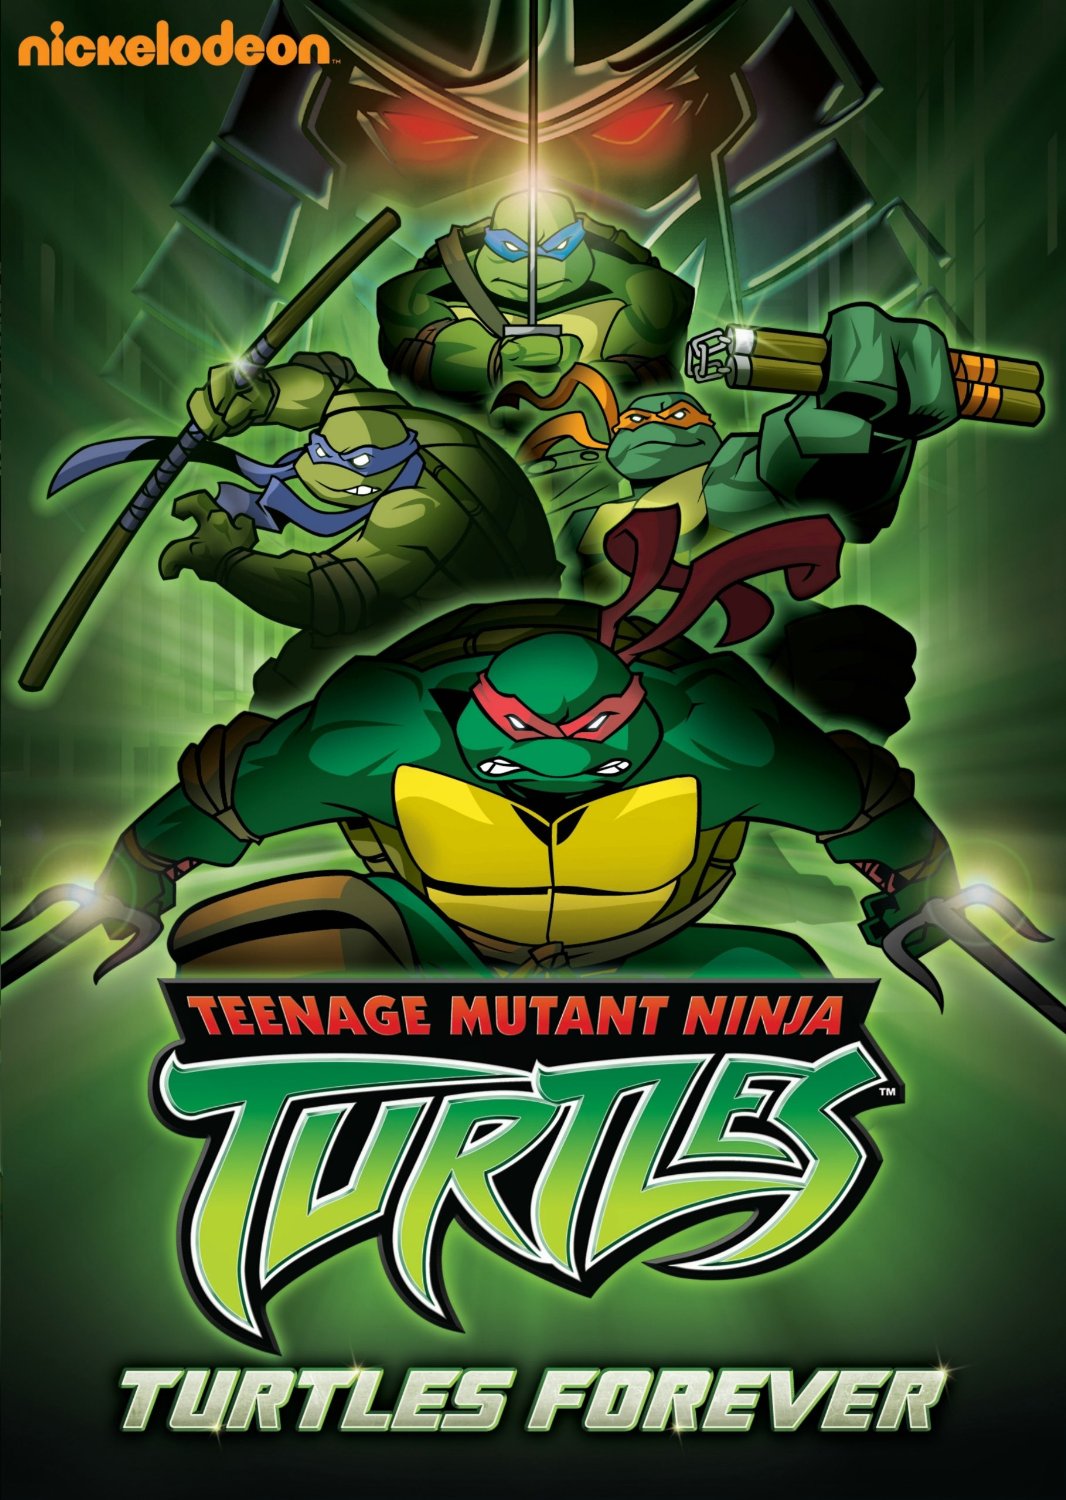 Teenage Mutant Ninja Turtles 2003 Tv Series Video Releases Tmntpedia Fandom Powered By Wikia